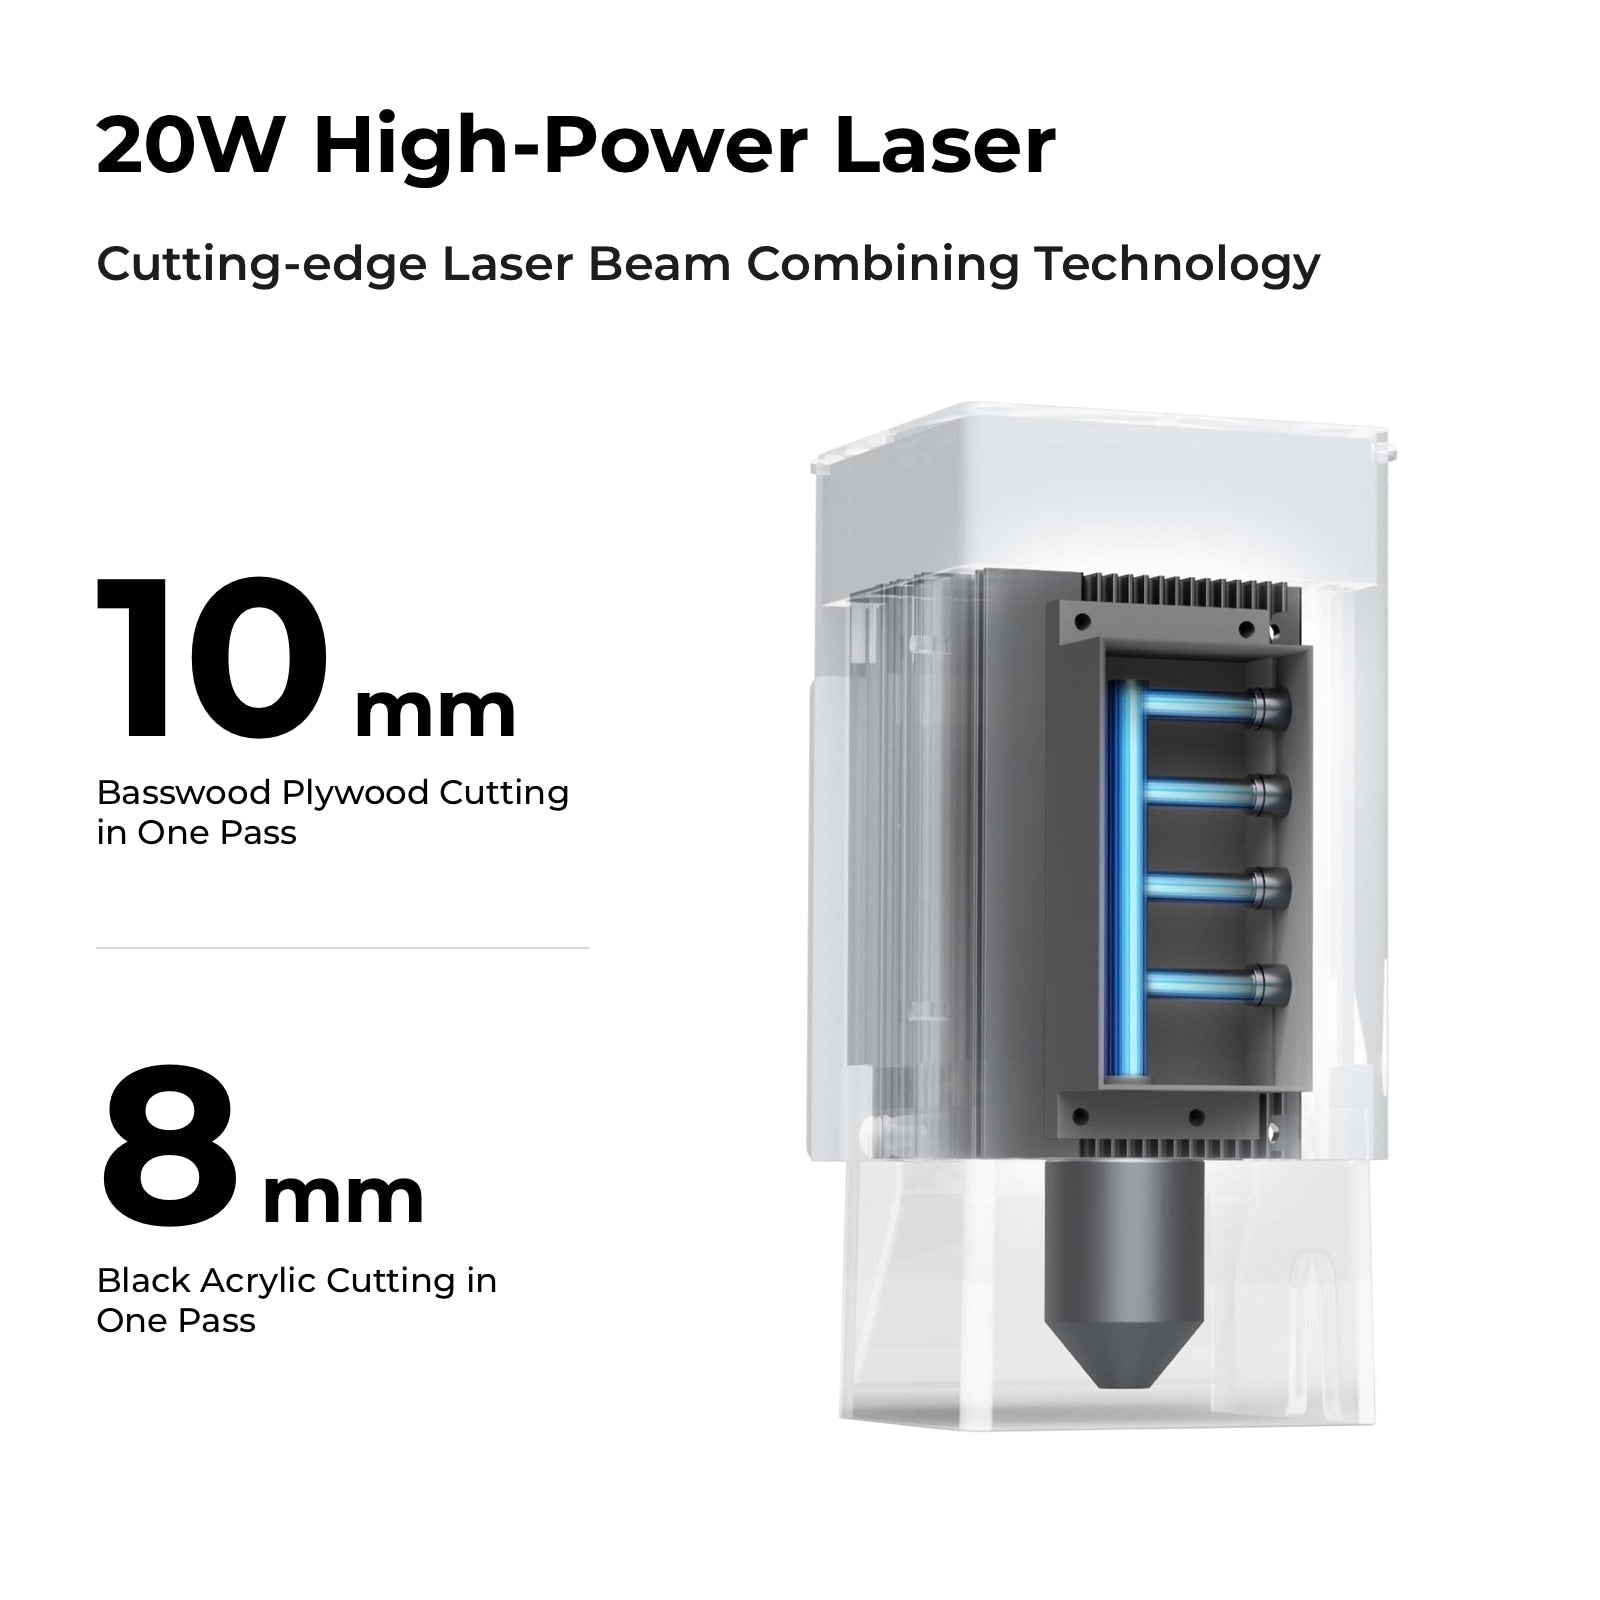 Xtool D1 Pro 20W Desktop Laser Engraver Snijmachine